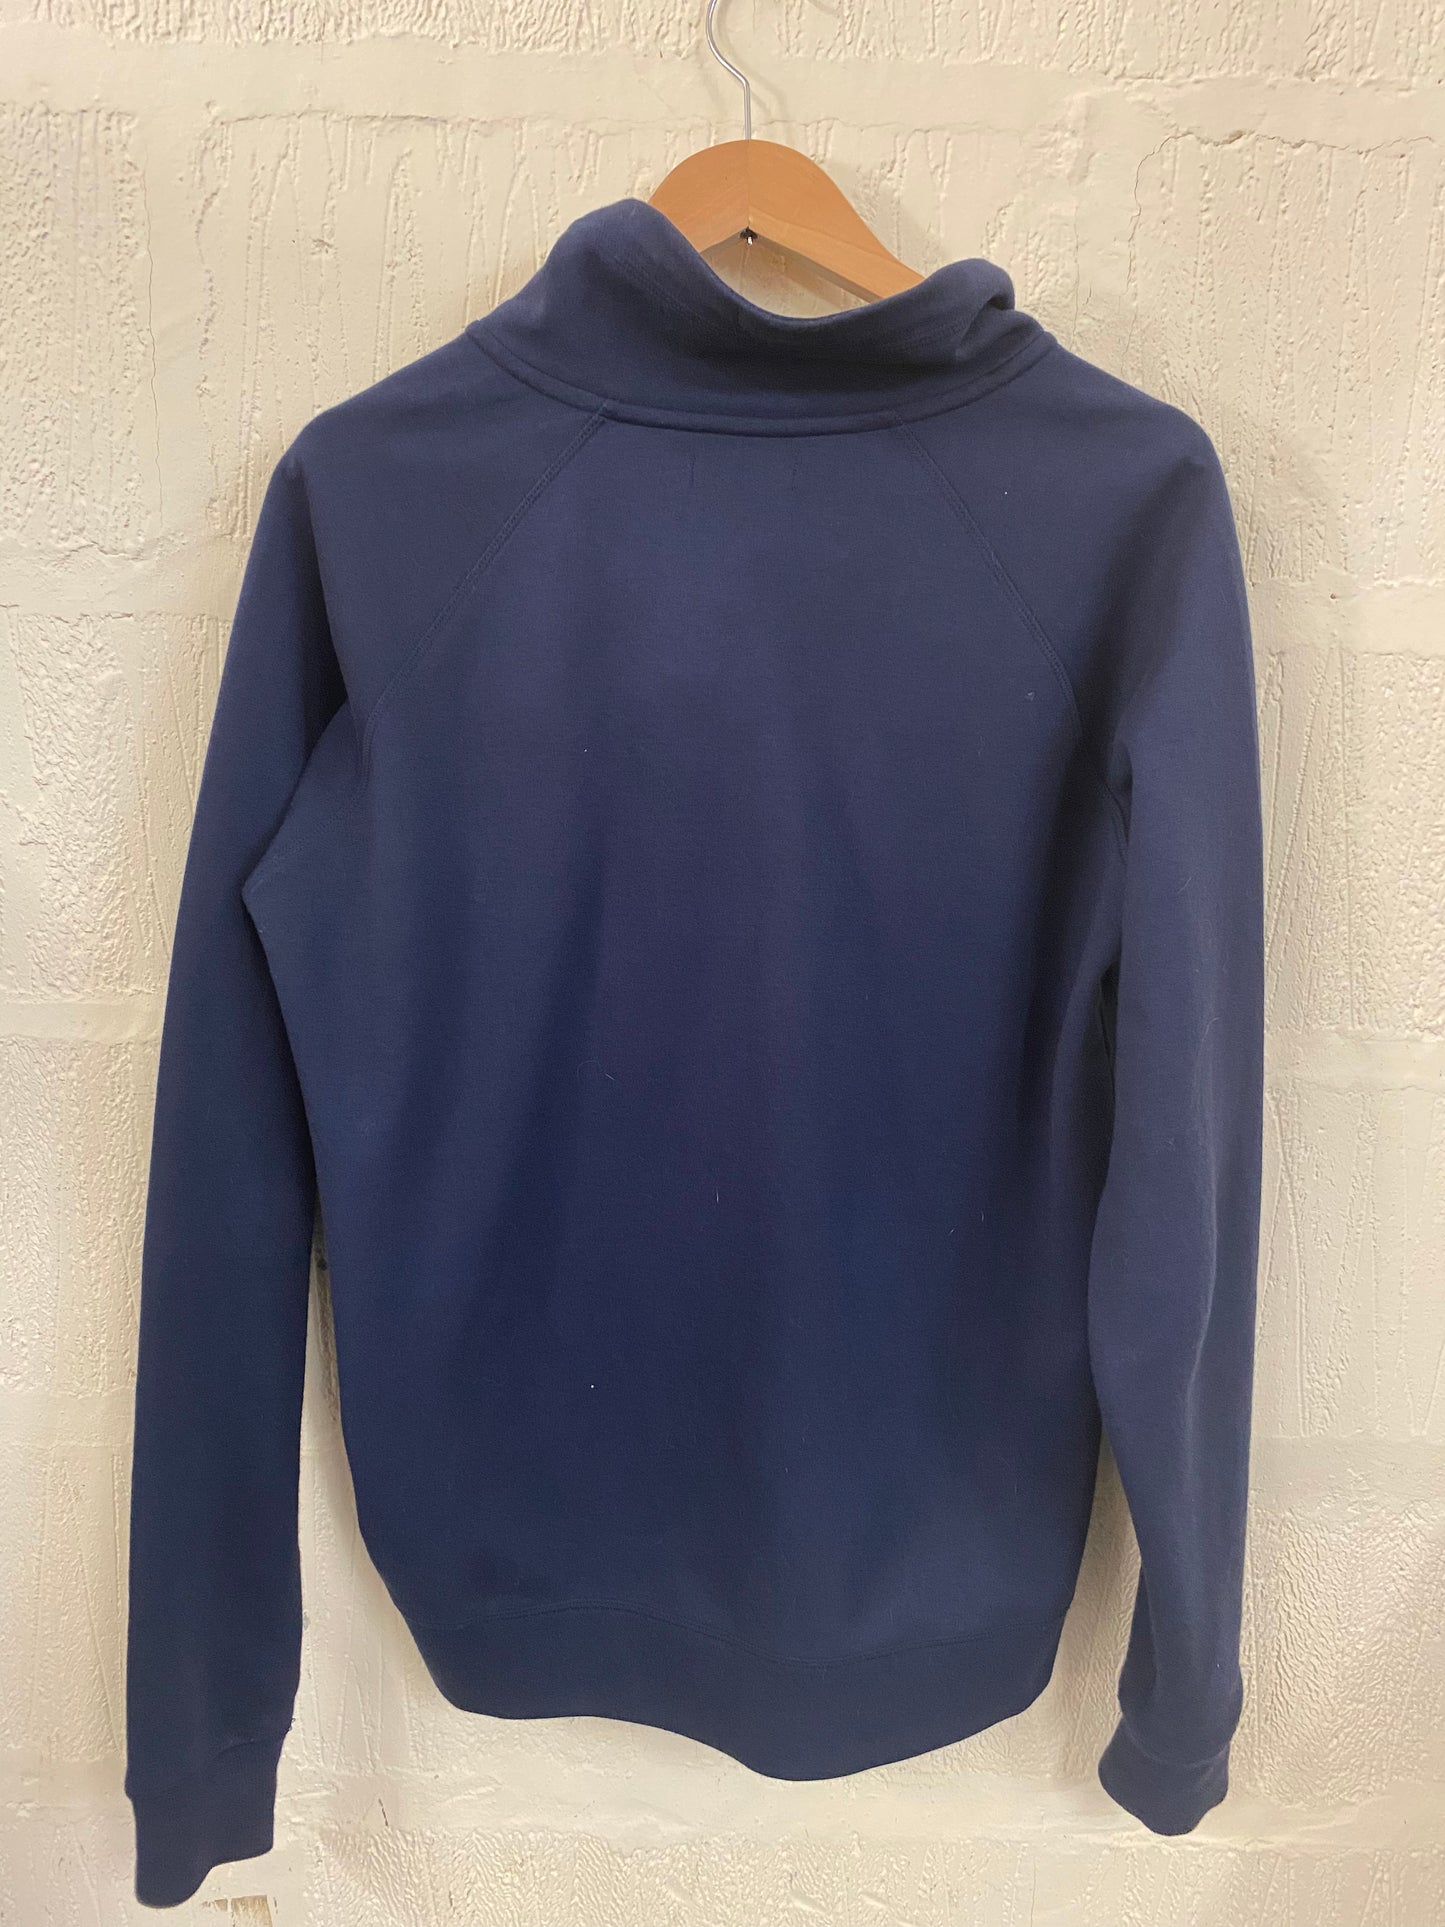 Tommy Hilfiger Navy Zip Sweatshirt  1985 New York Size S